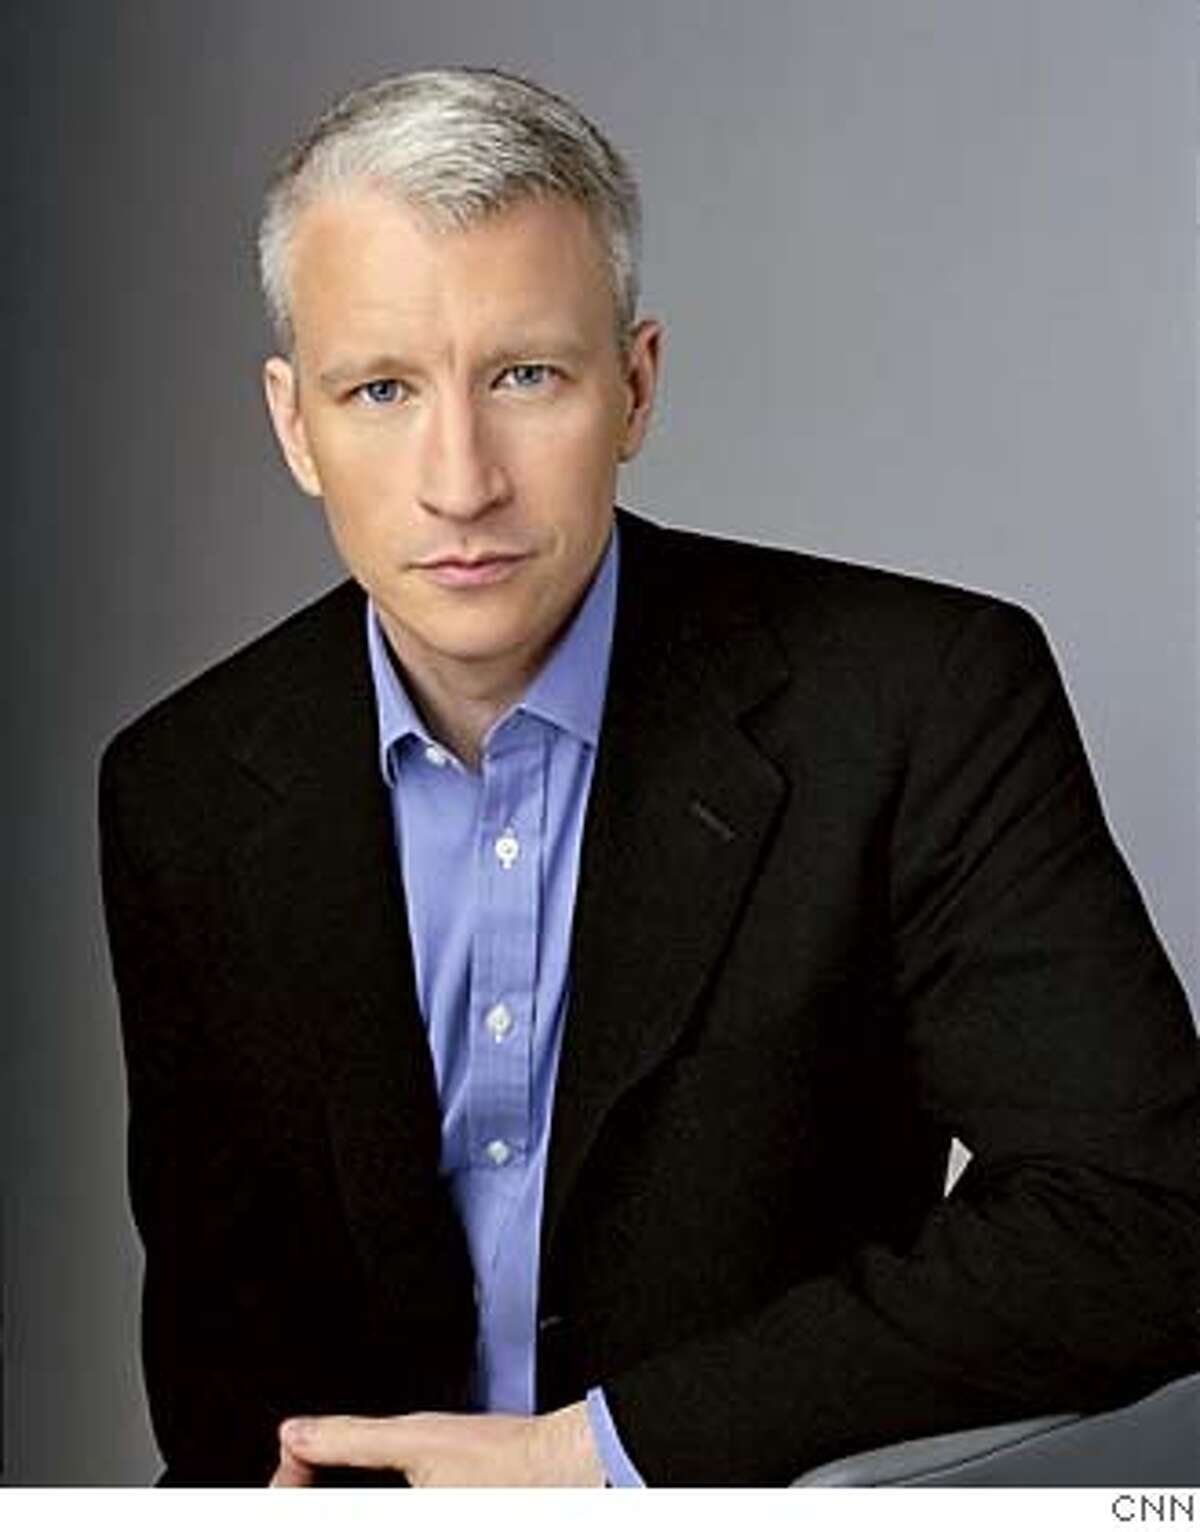 for ; Anderson Cooper, CNN Anchor Courtesy of CNN / handout